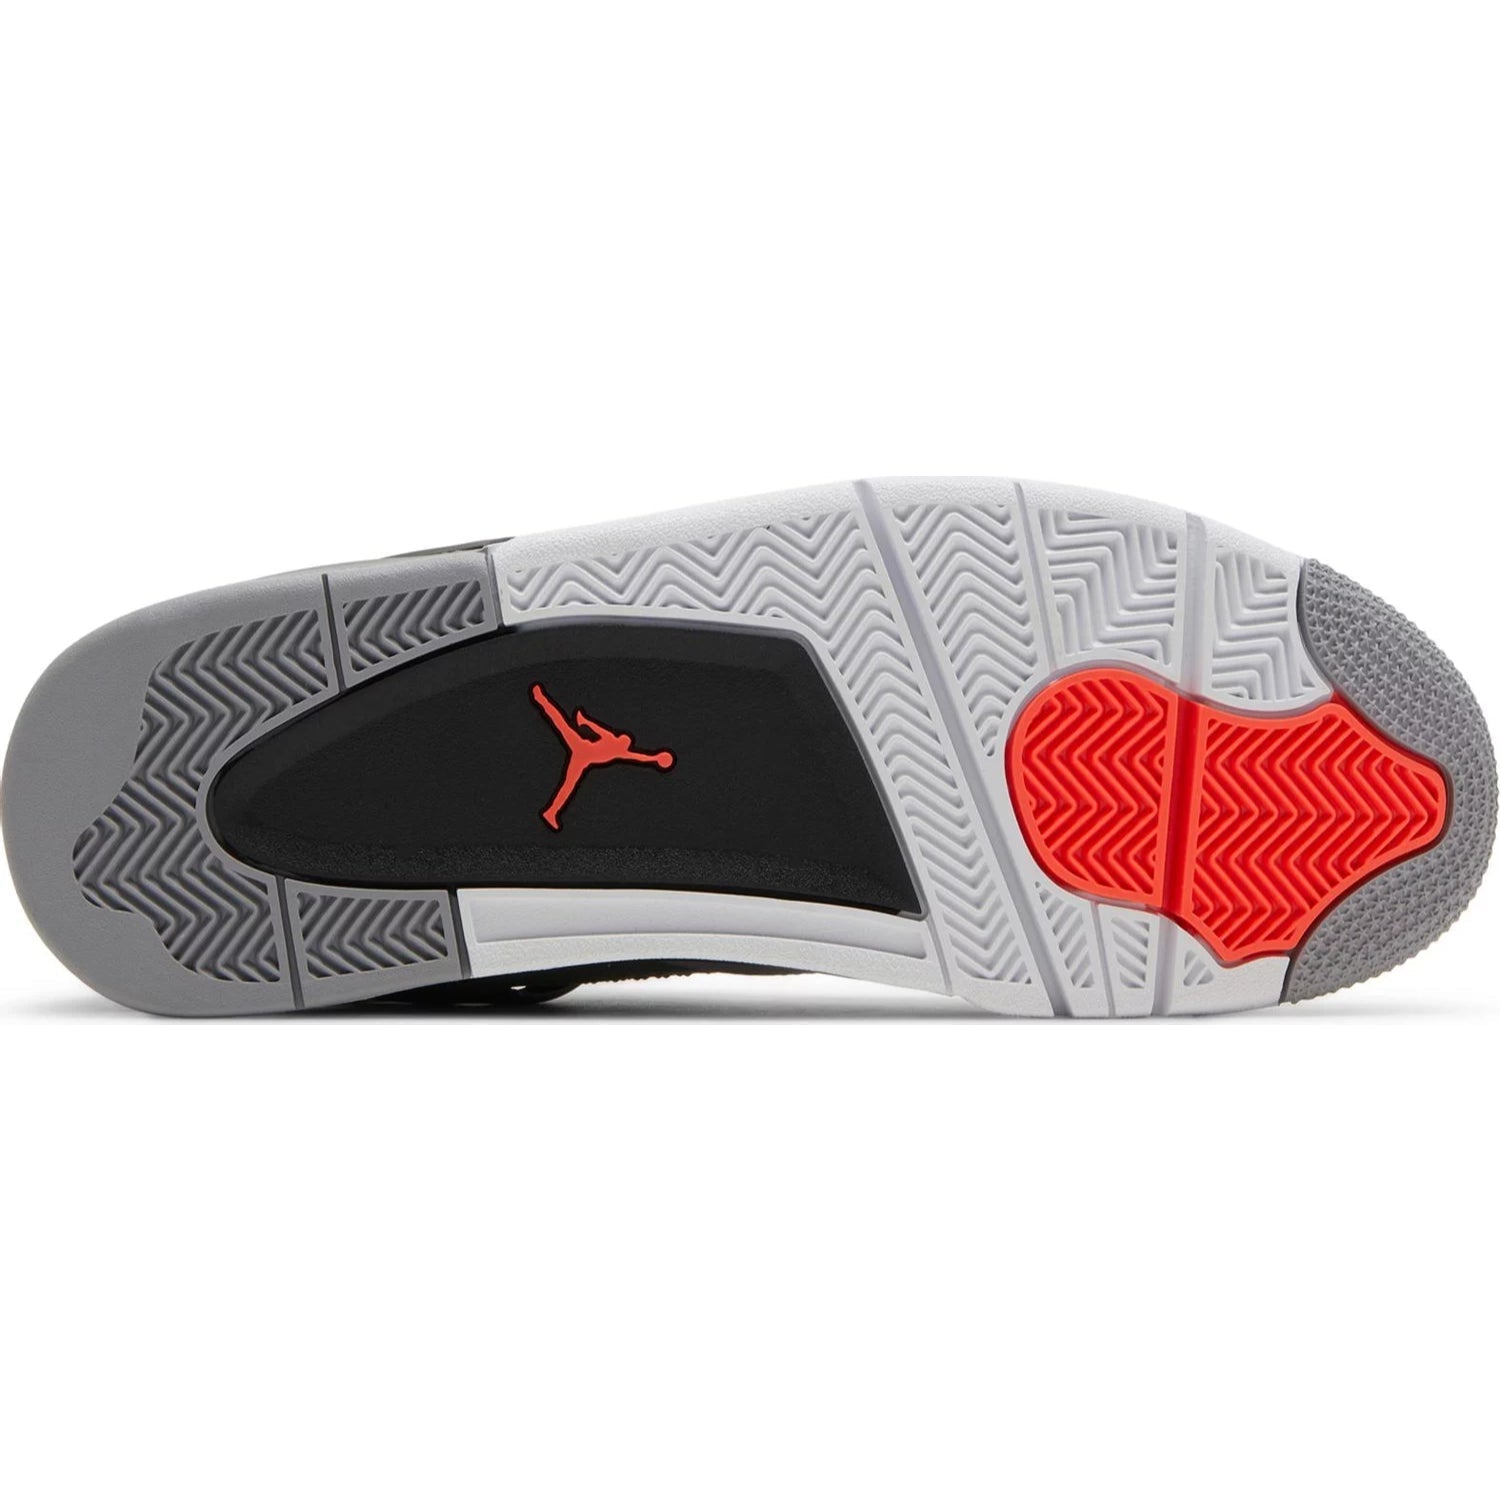 Jordan 4 Retro 'Infrared'  Nike   